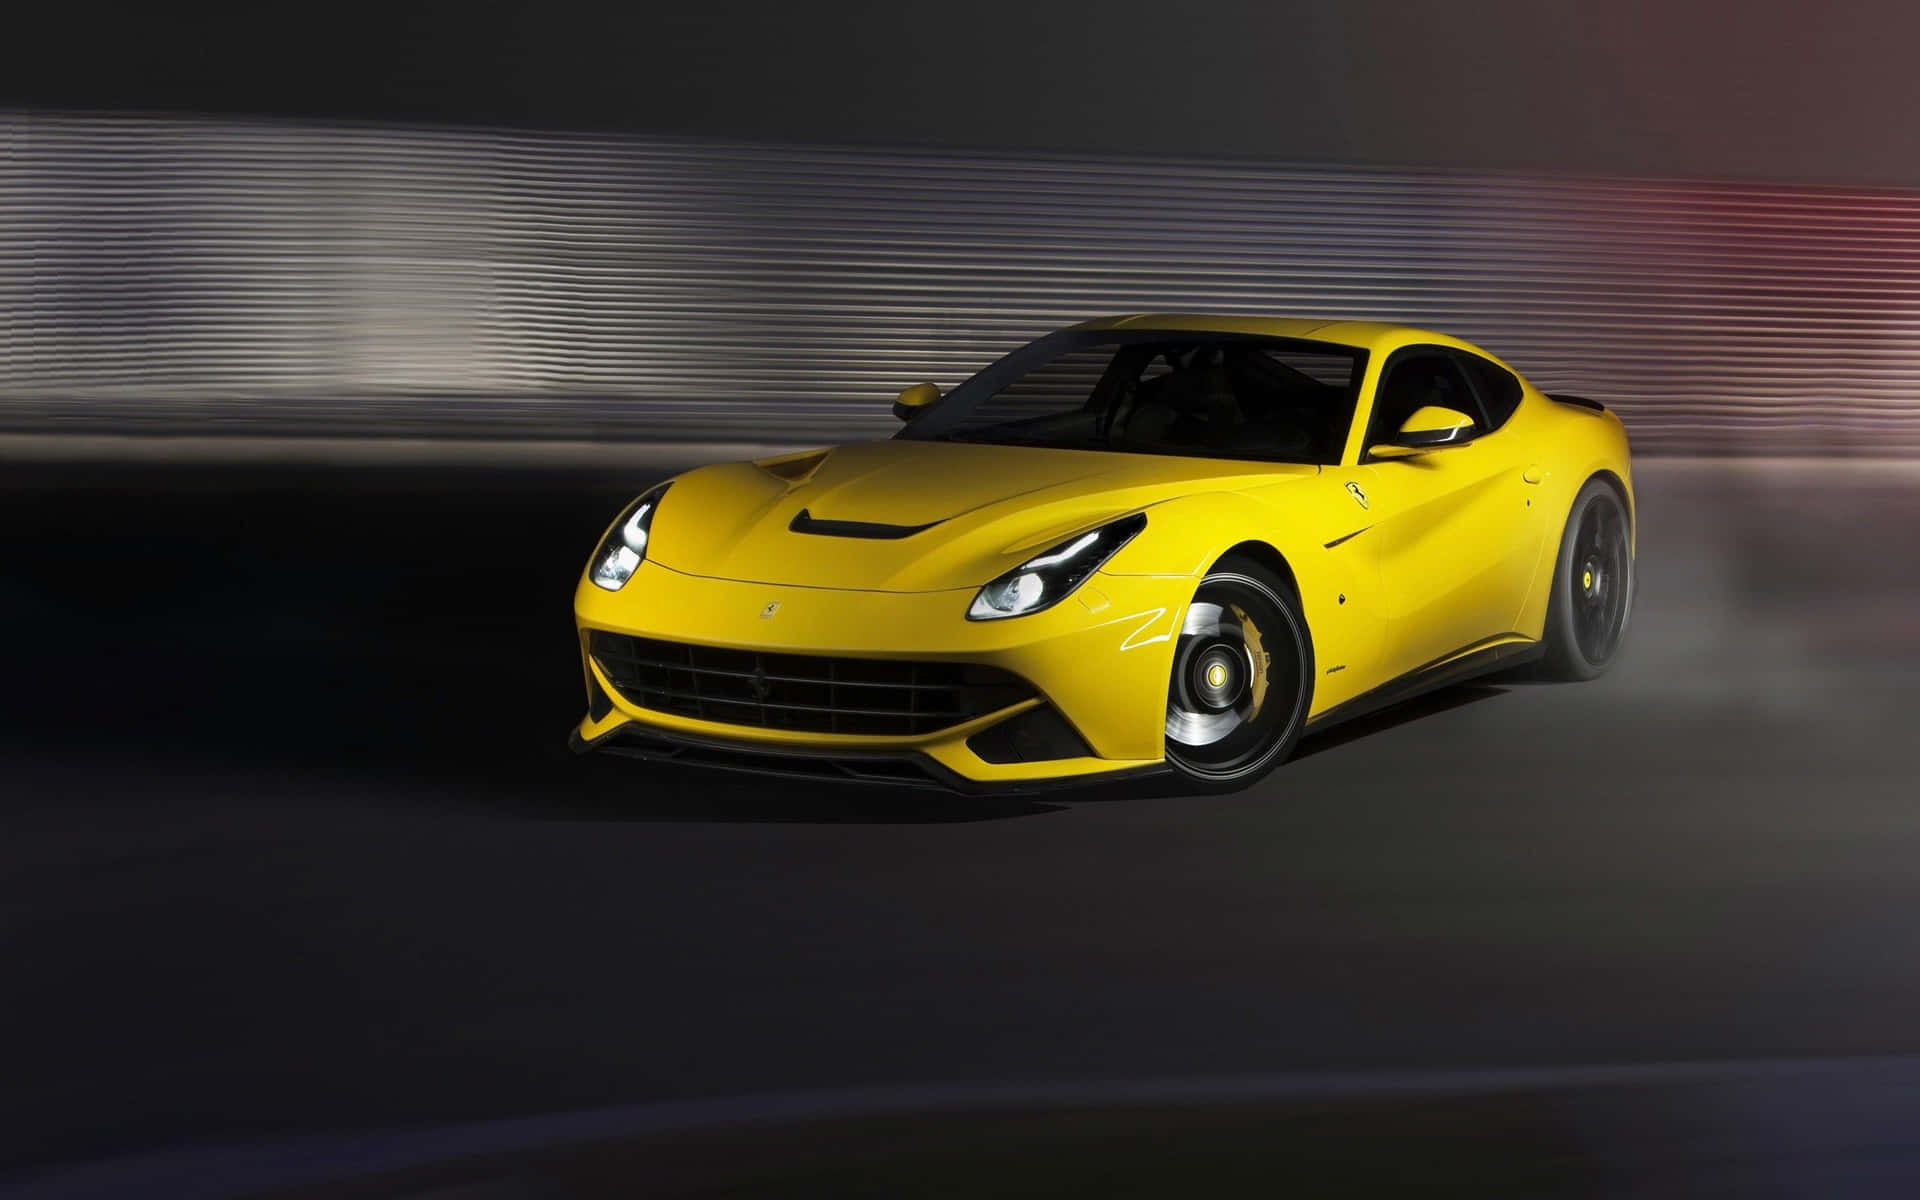 Stunning Yellow Sports Car Wallpaper